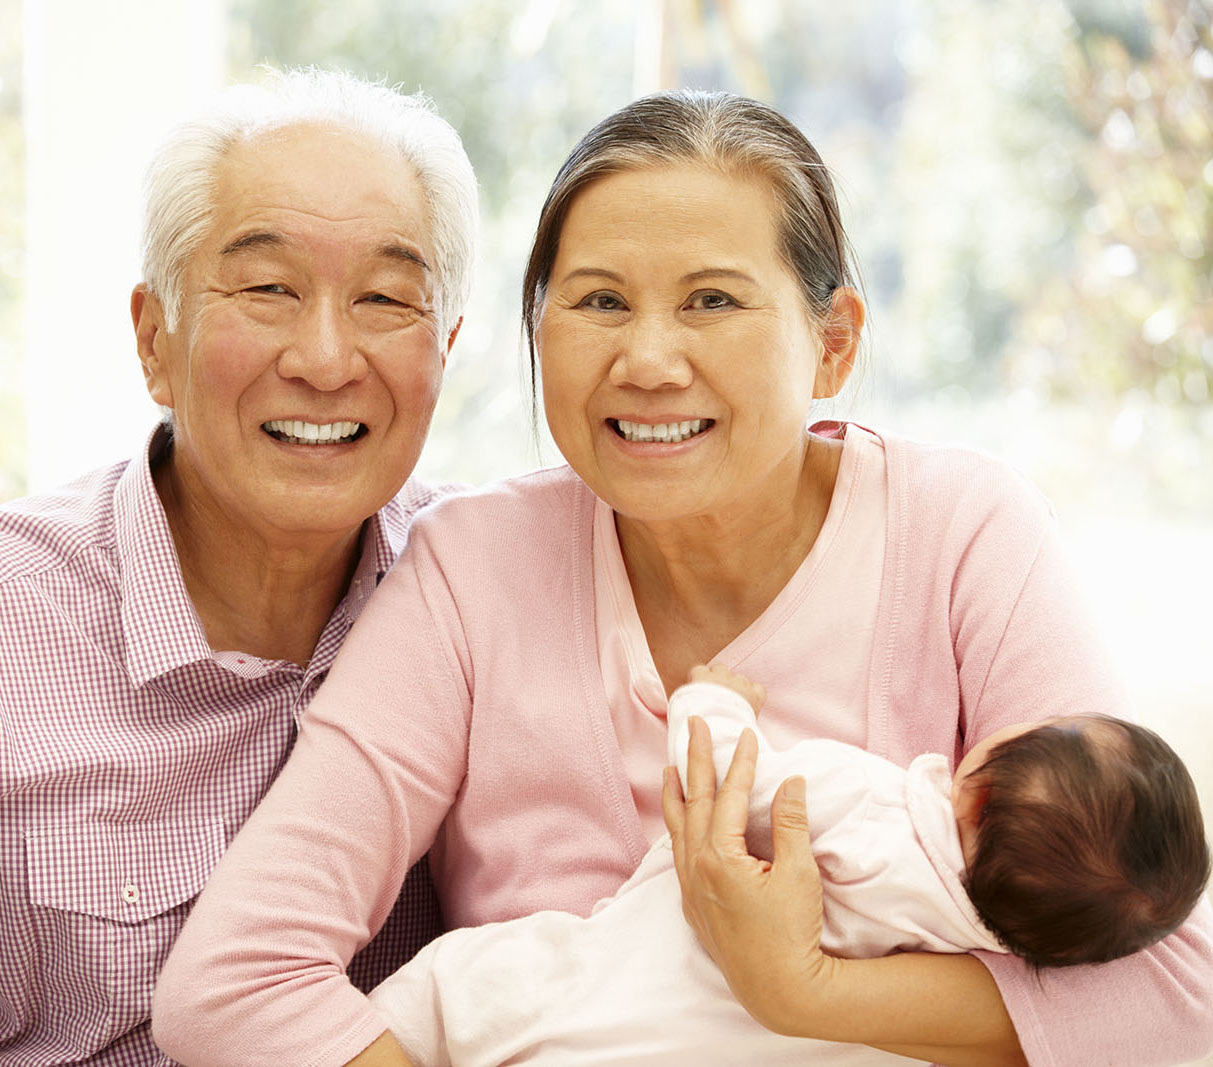 Happy grandparents hold their infant grandchild